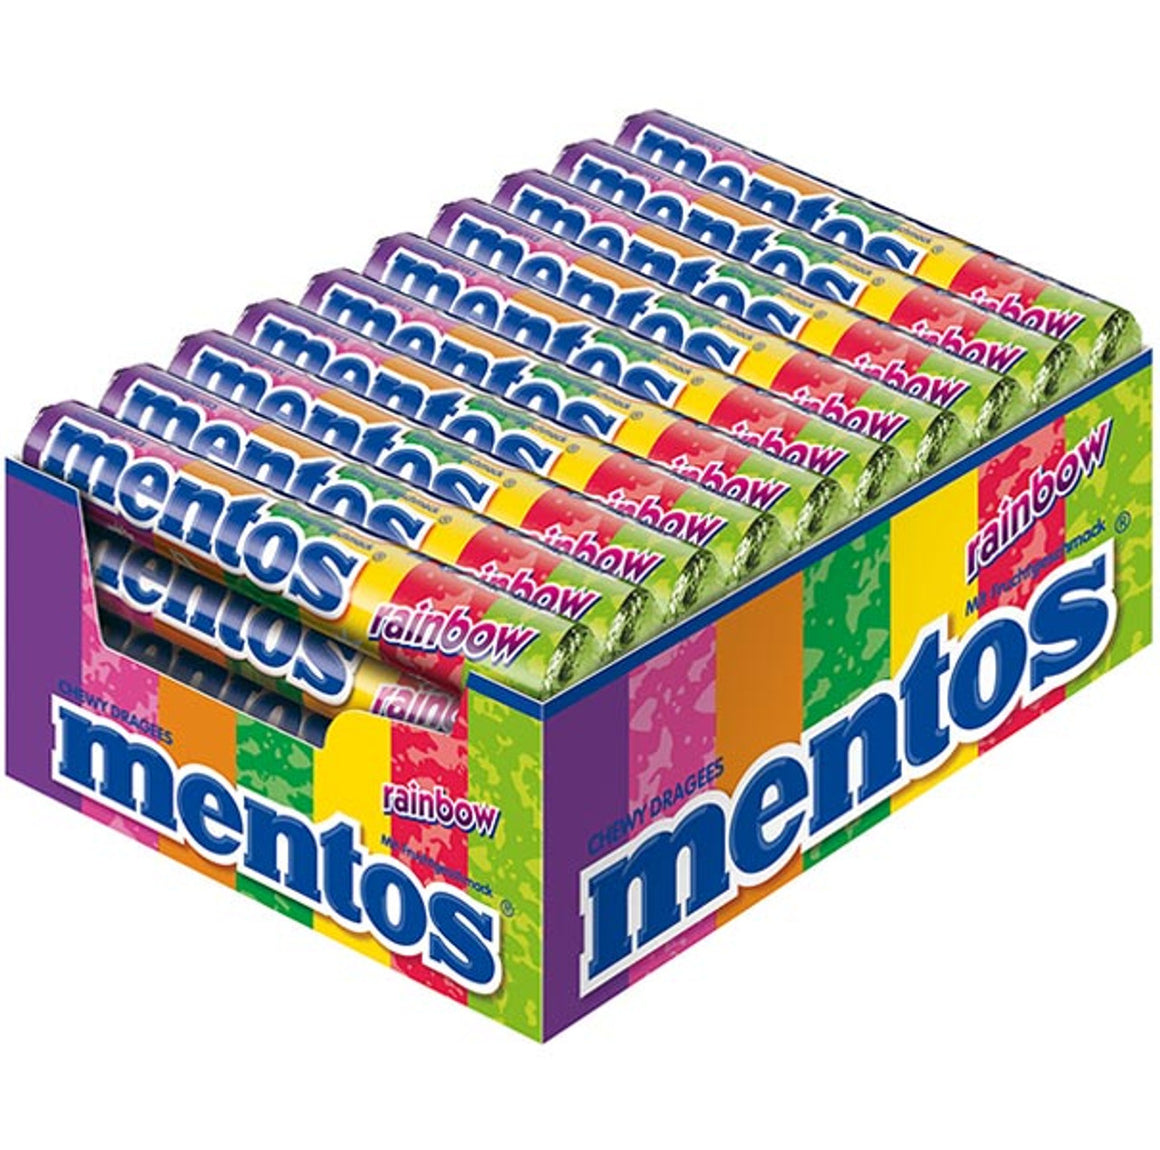 MENTOS ROLLS 40 RAINBOW 37.5G